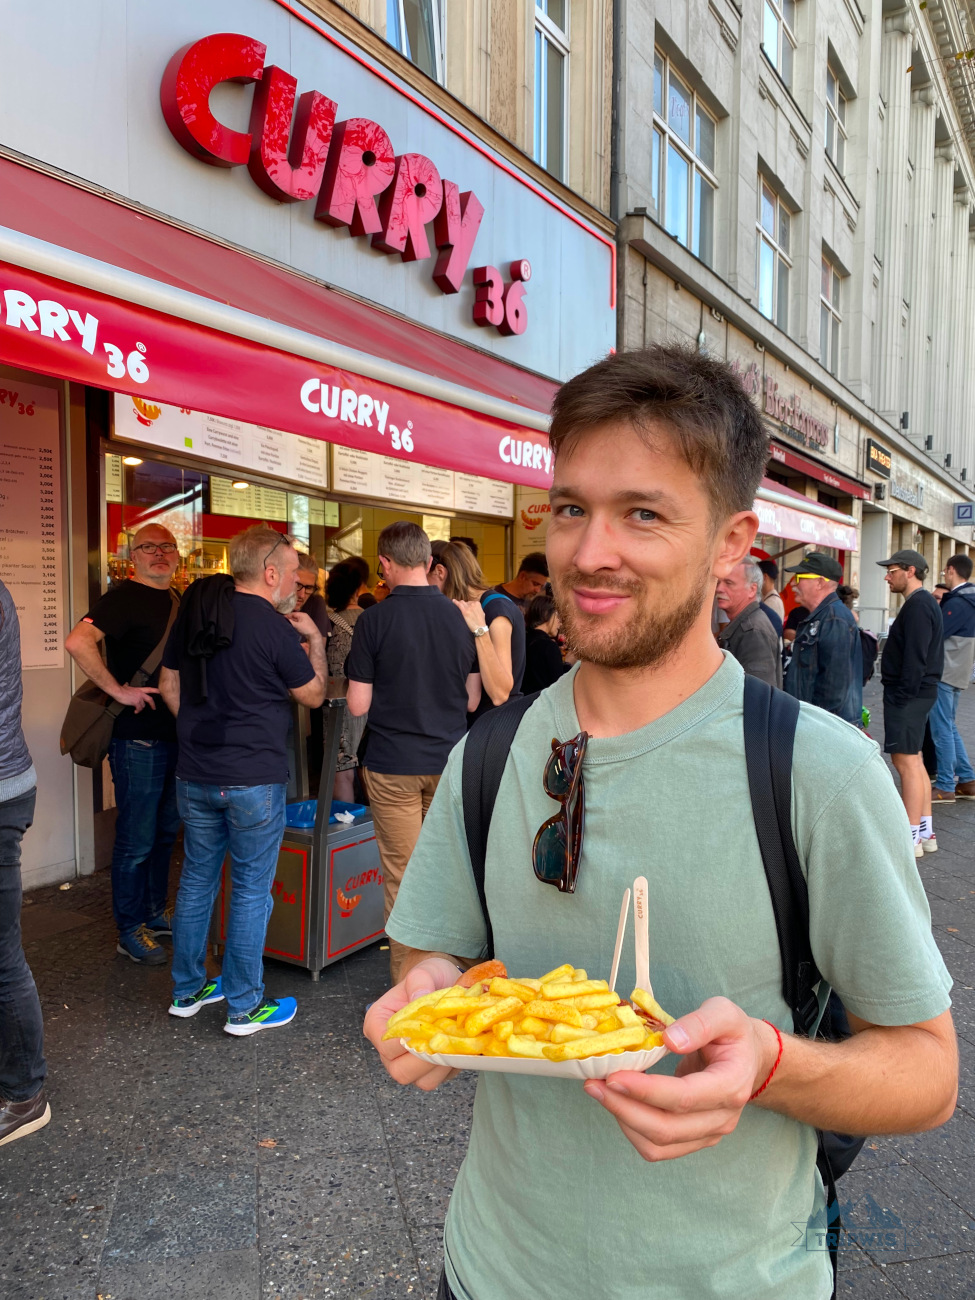 Curry 36 in Berlin